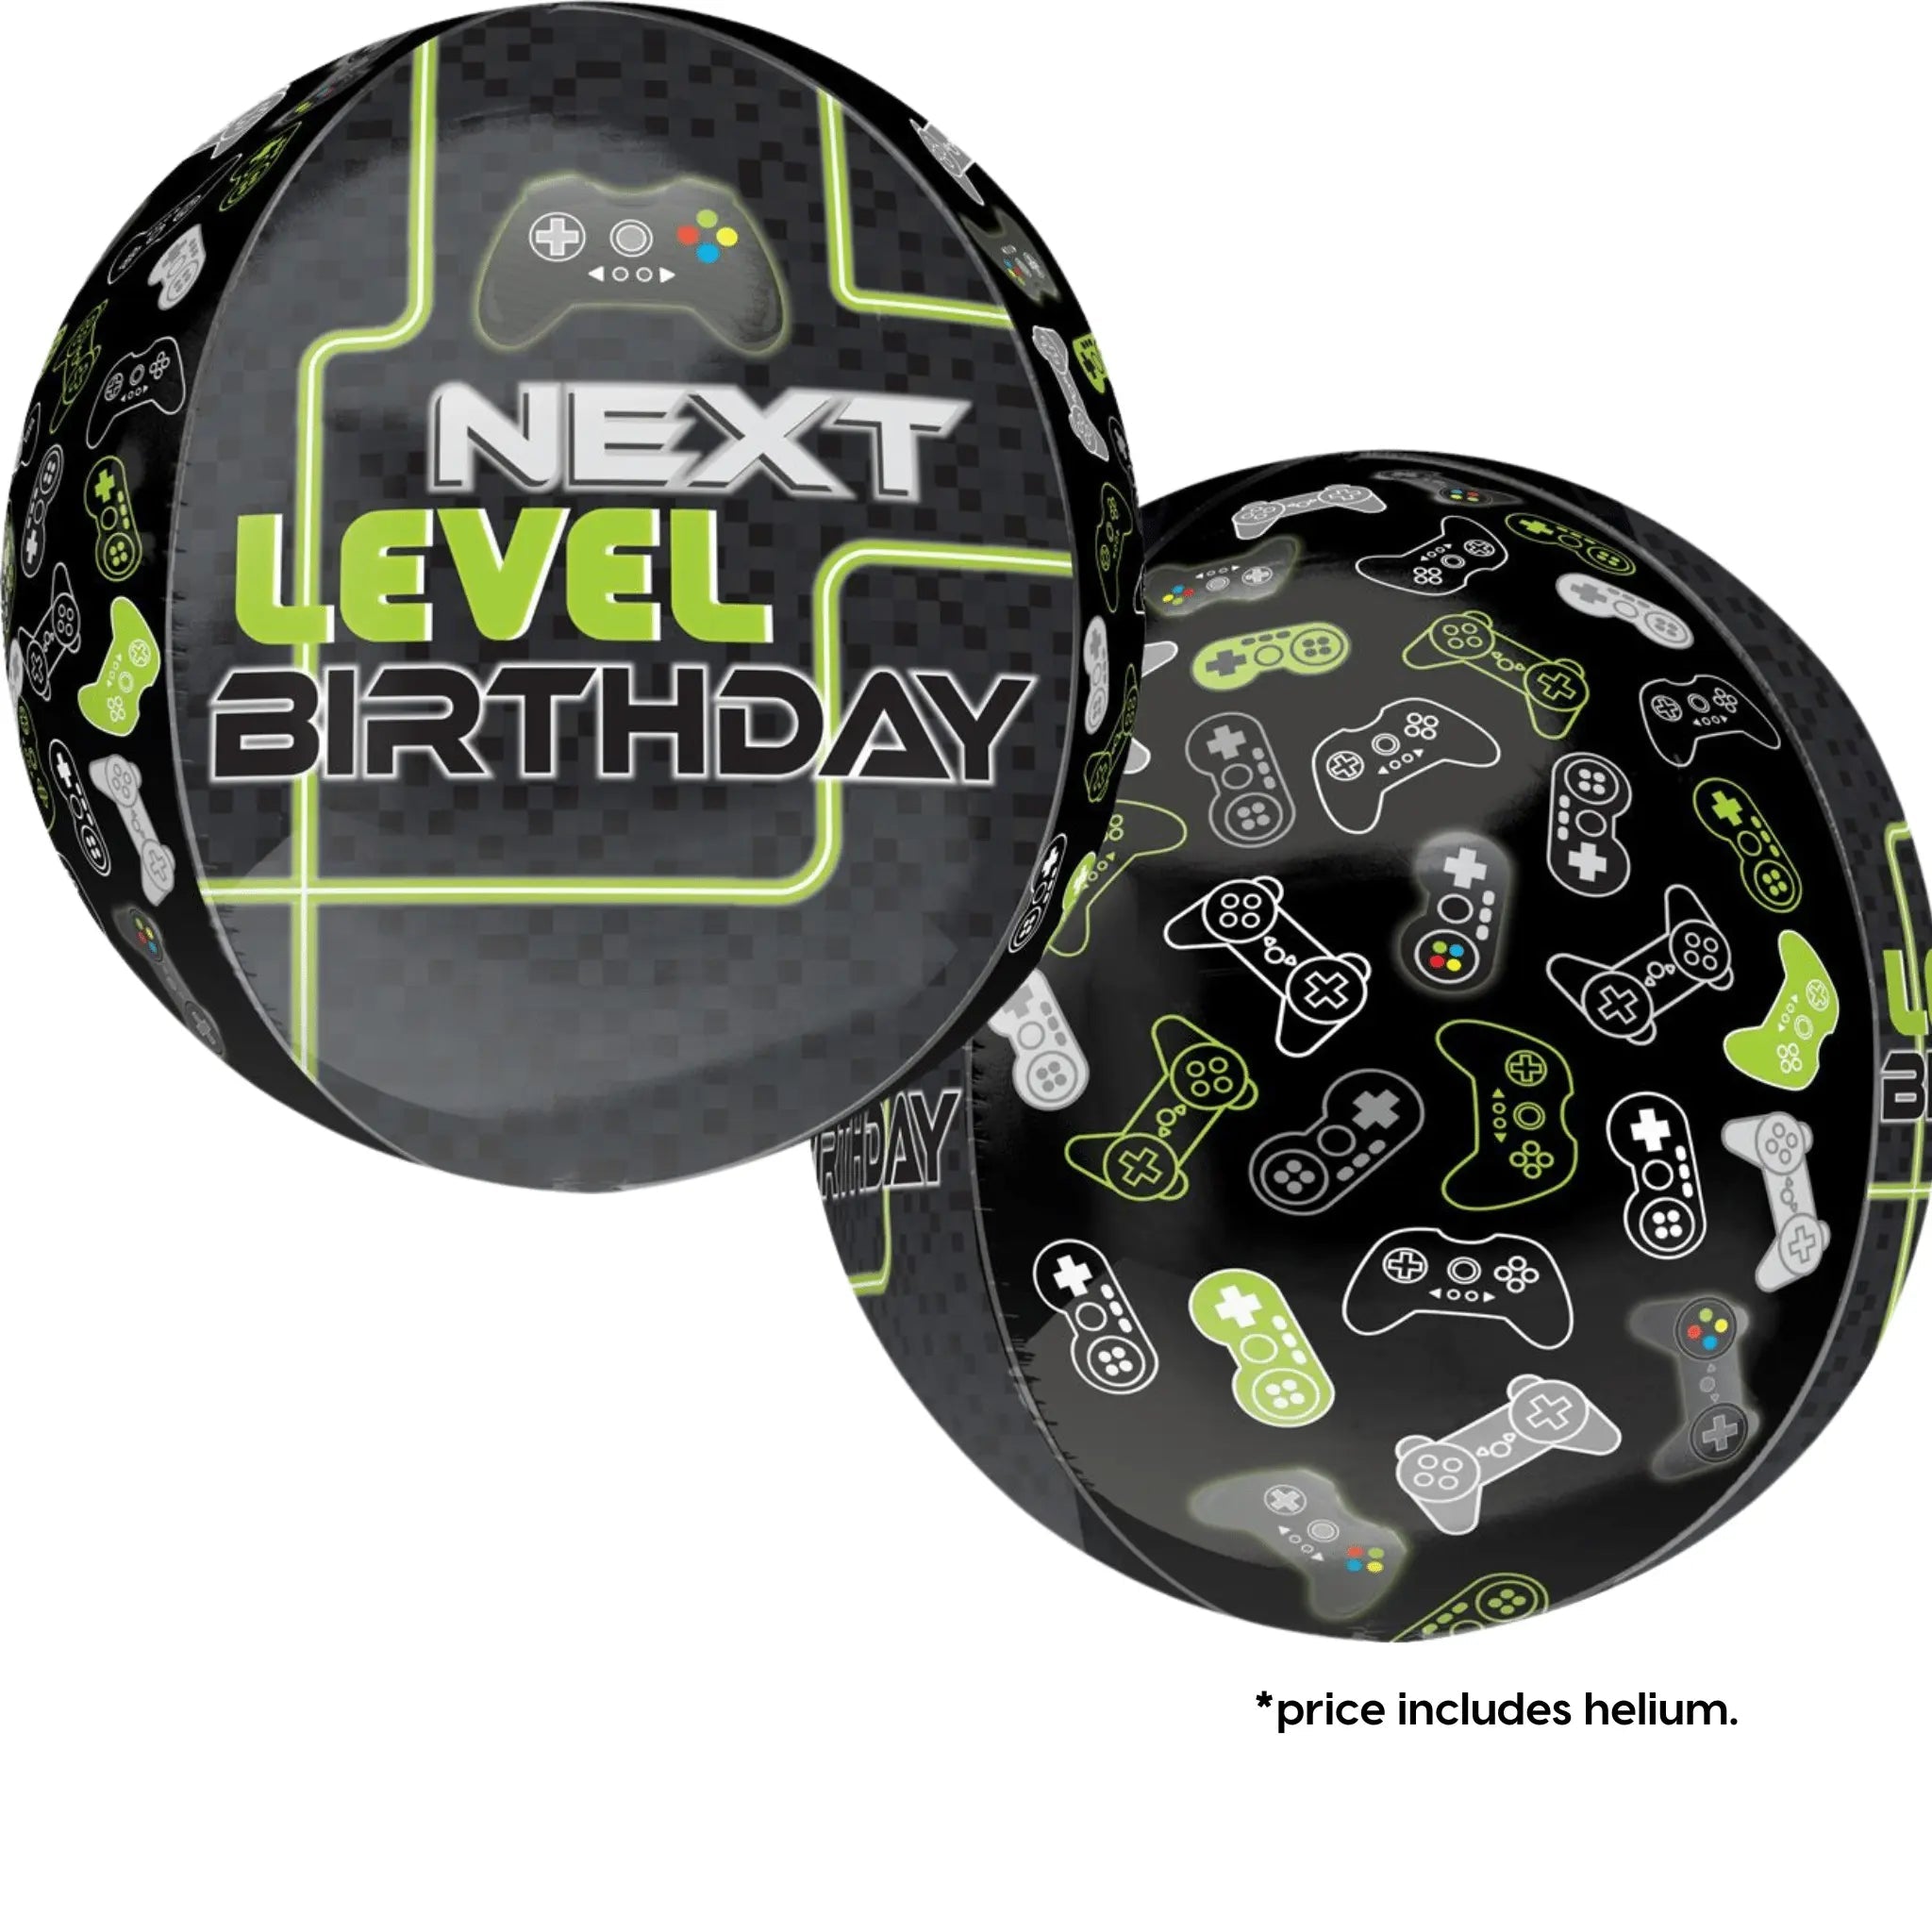 Orbz Balloon - Next Level Gamer Birthday | The Party Hut